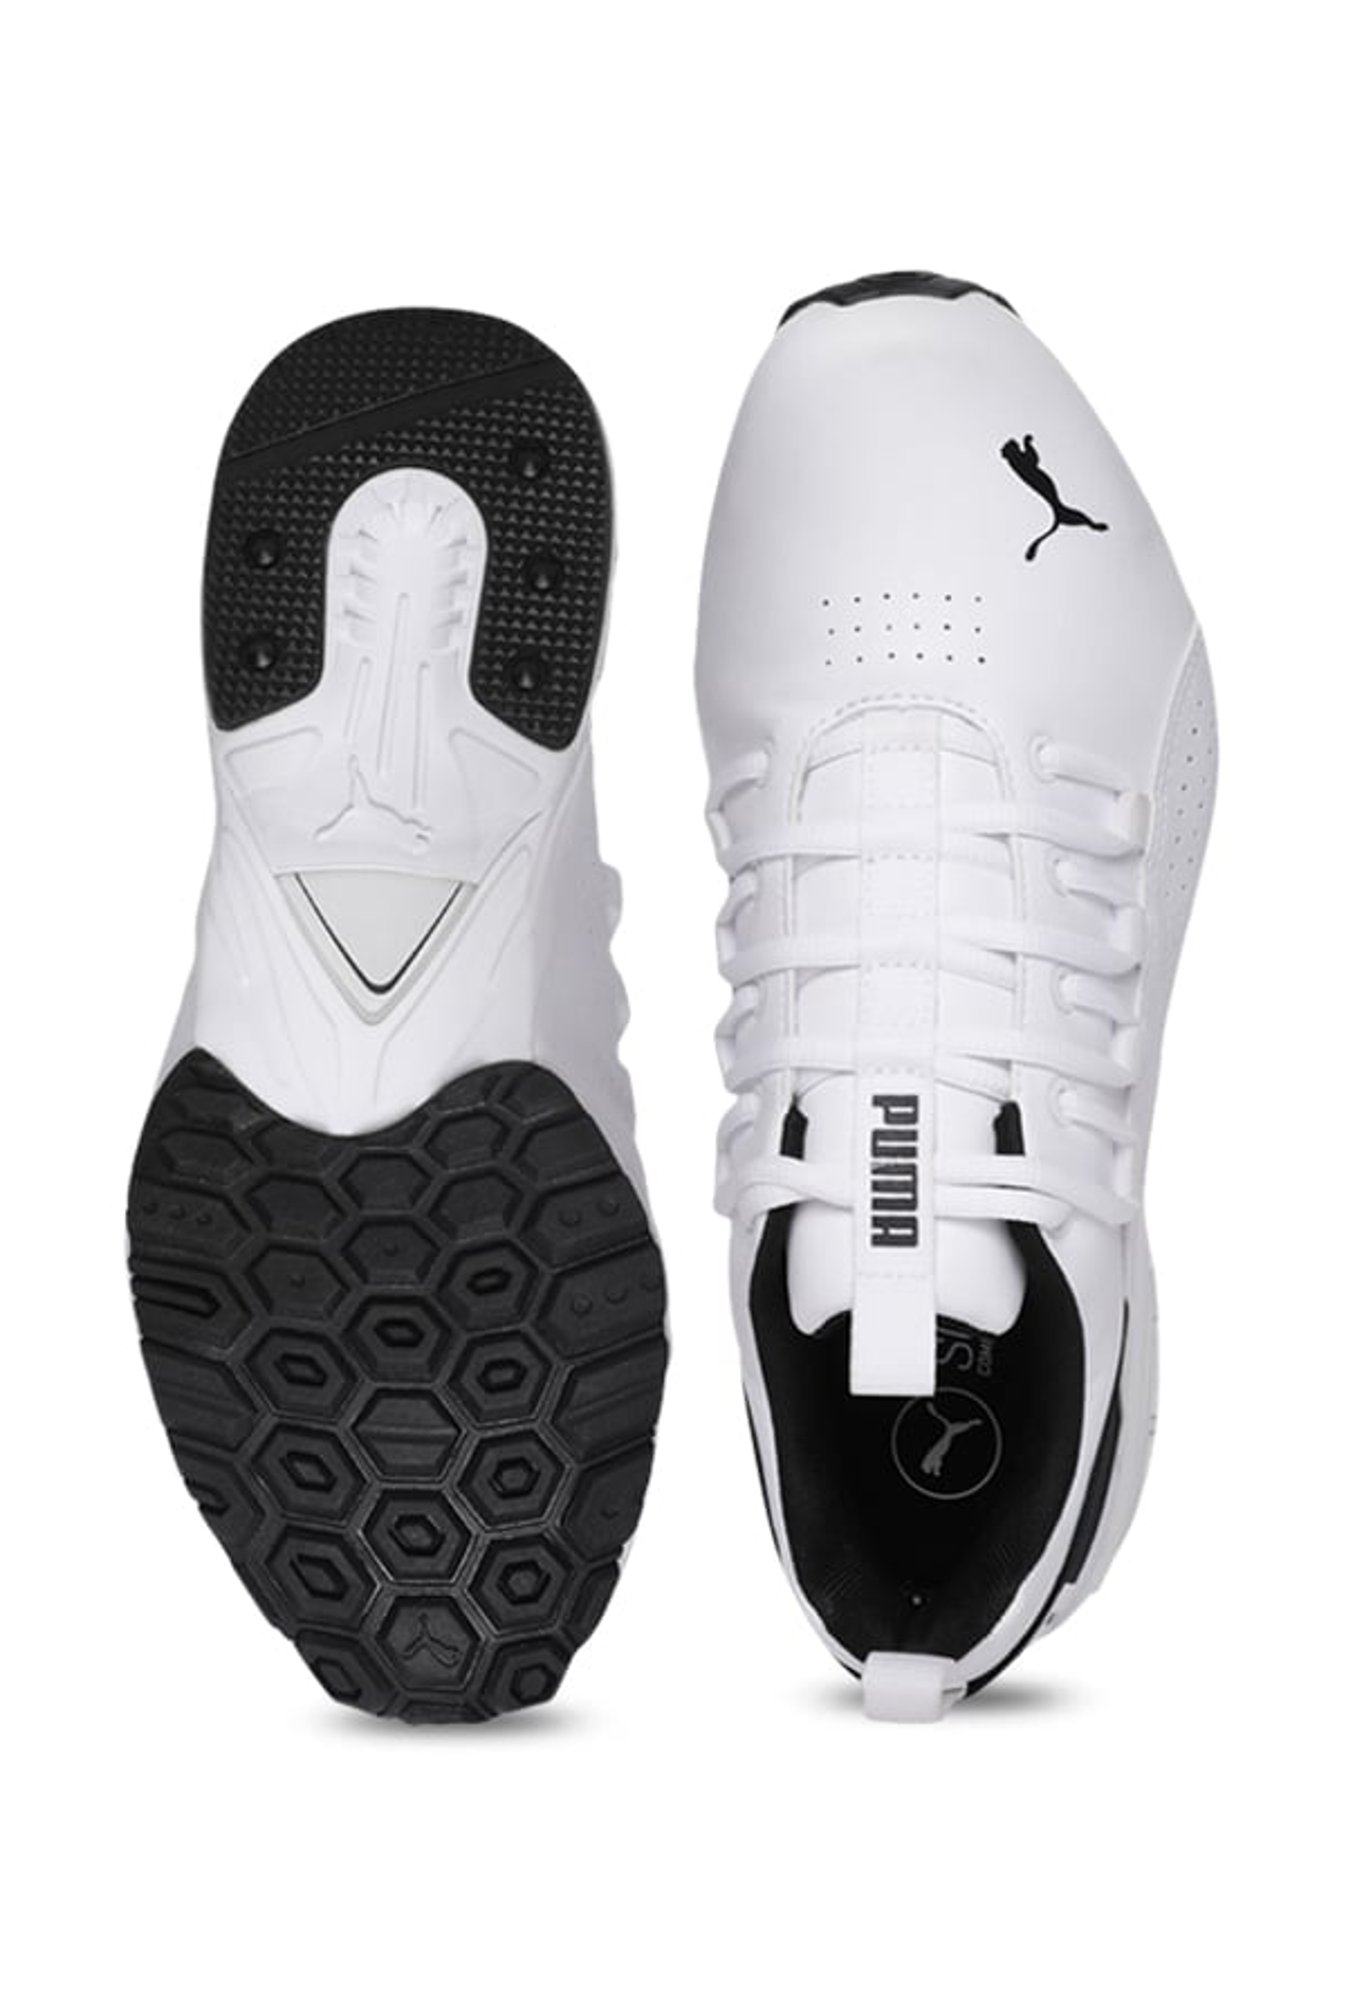 puma men's hexa dot idp white black running shoes